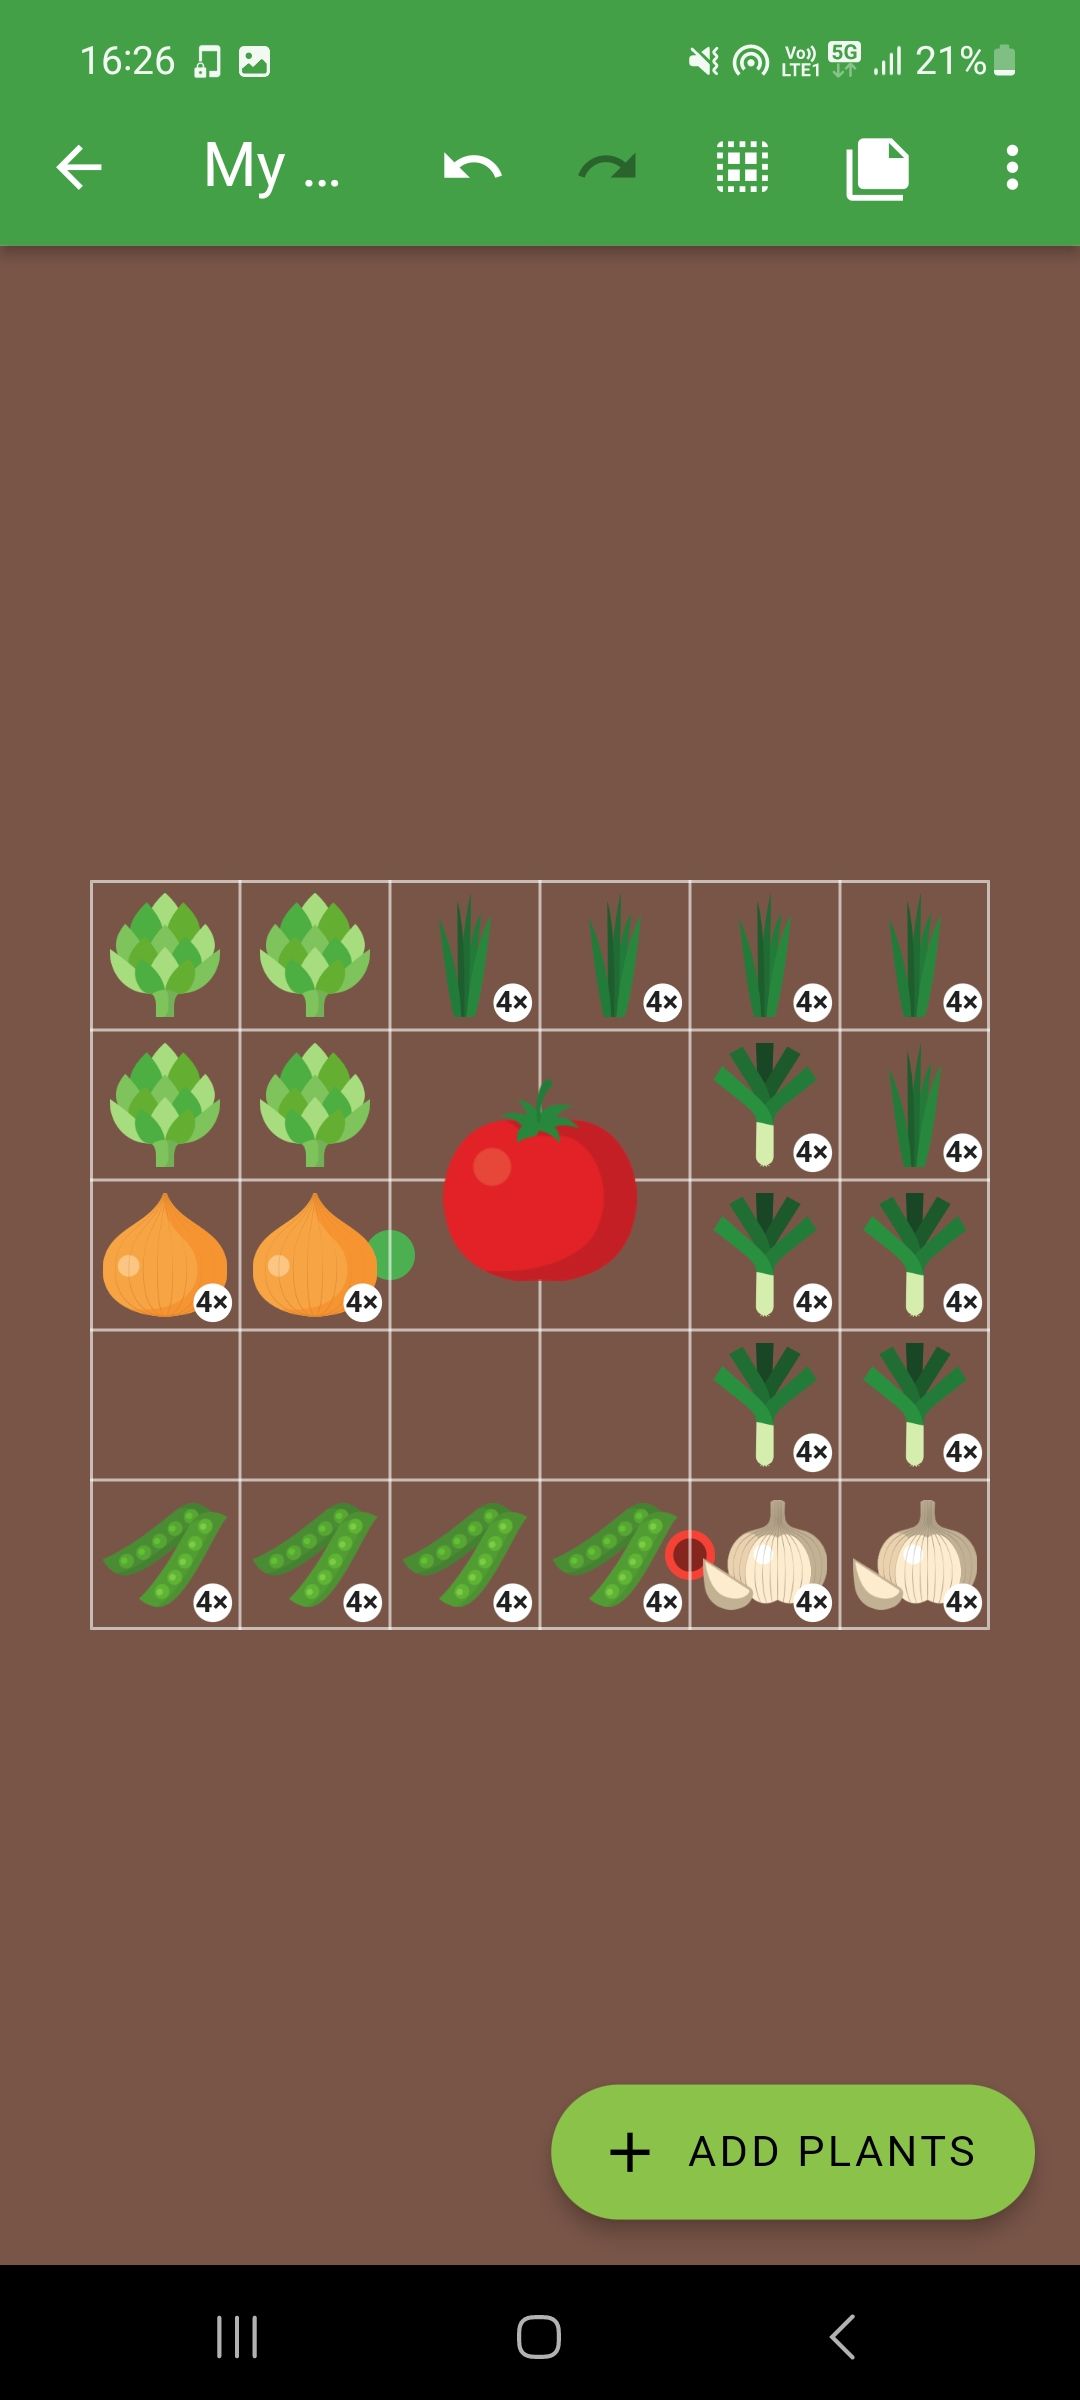 Plan your home garden grid in Planter app